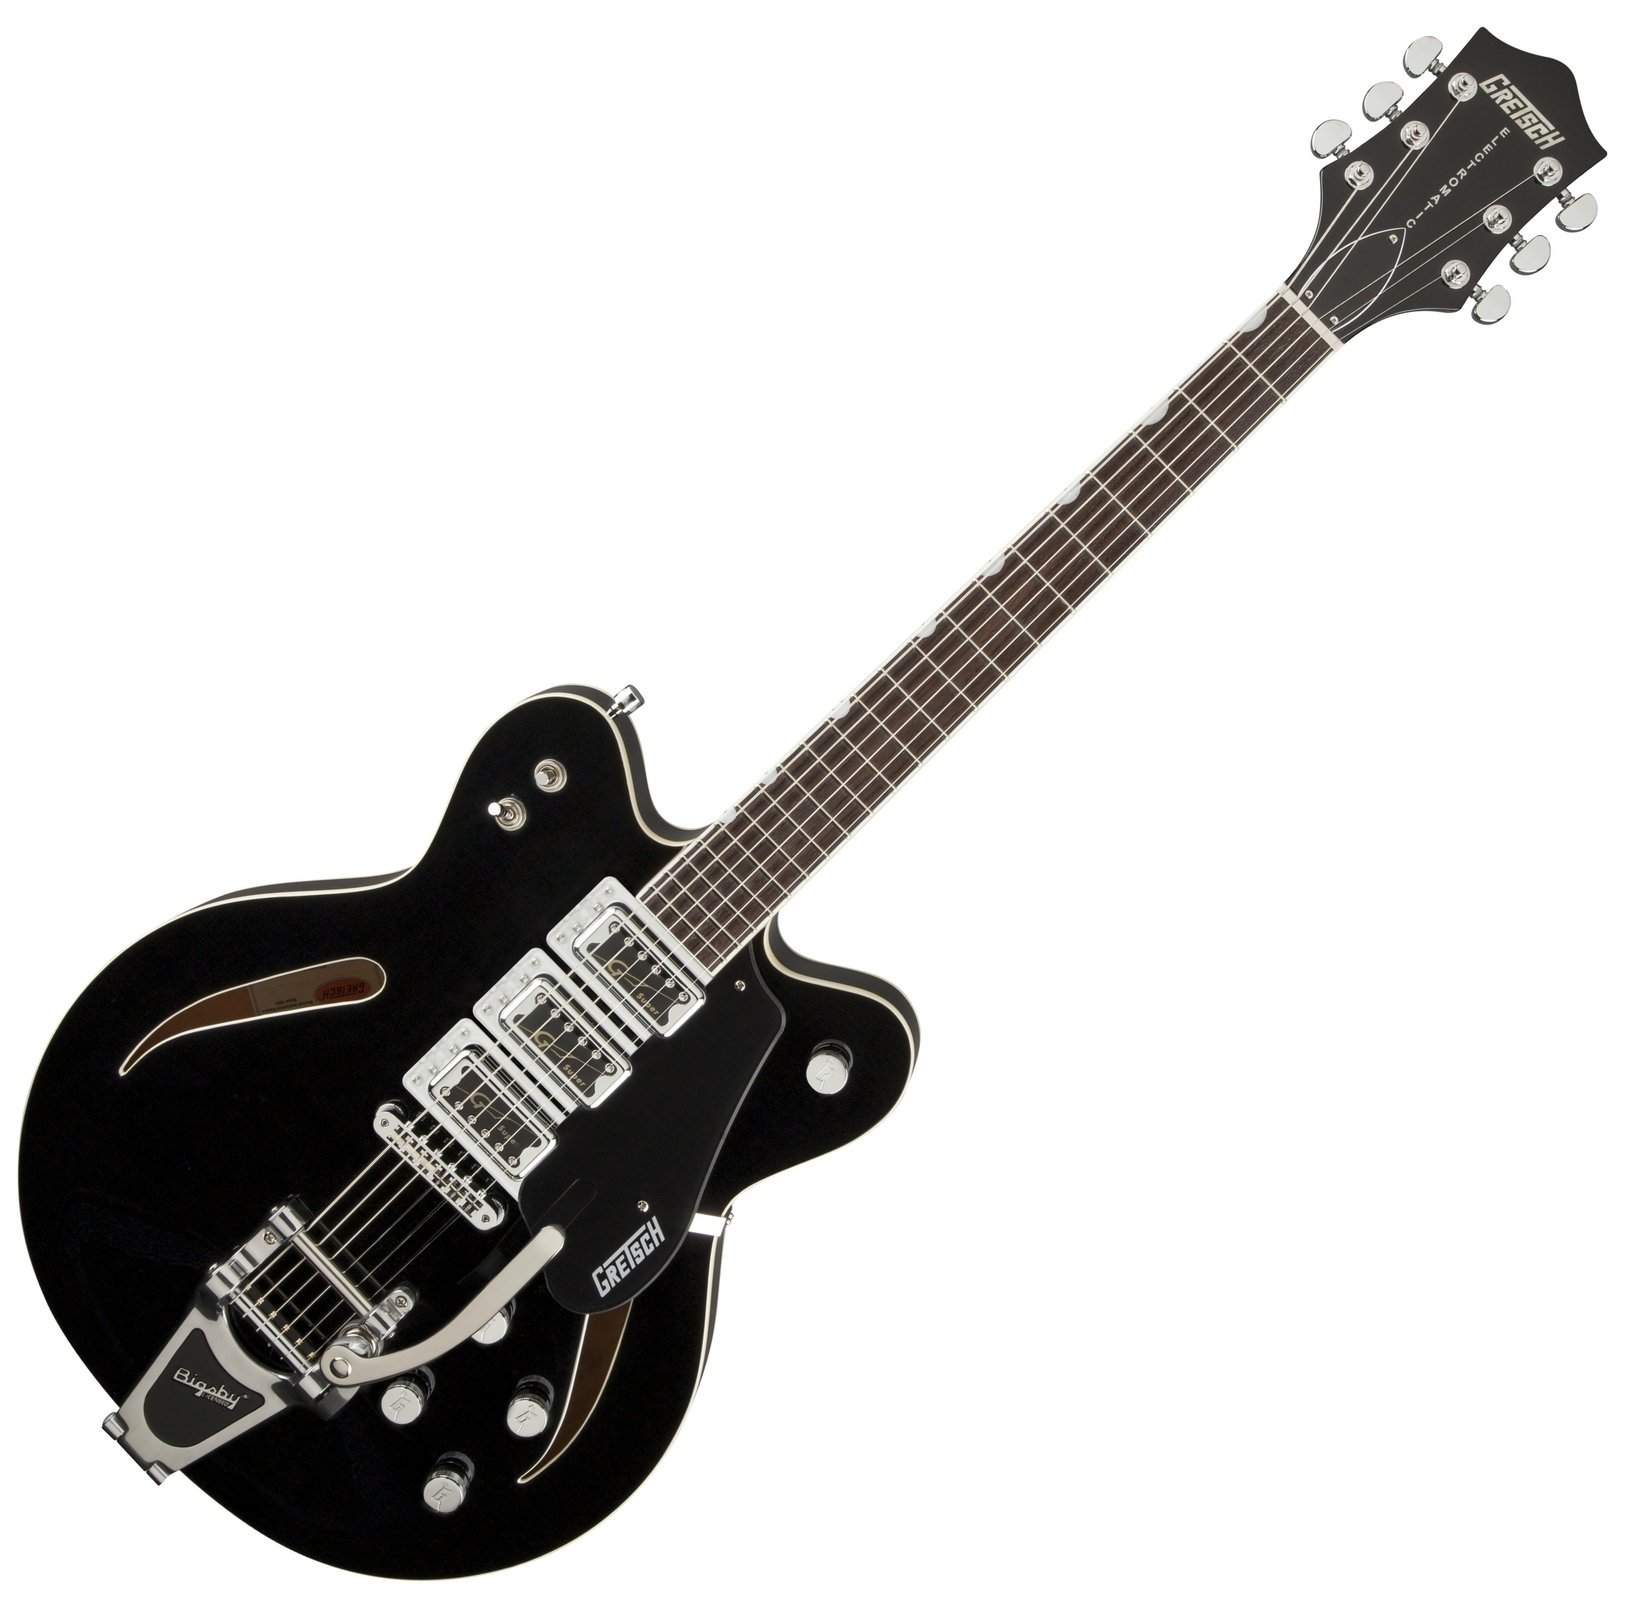 Semiakustická kytara Gretsch G5622T-CB Electromatic Black